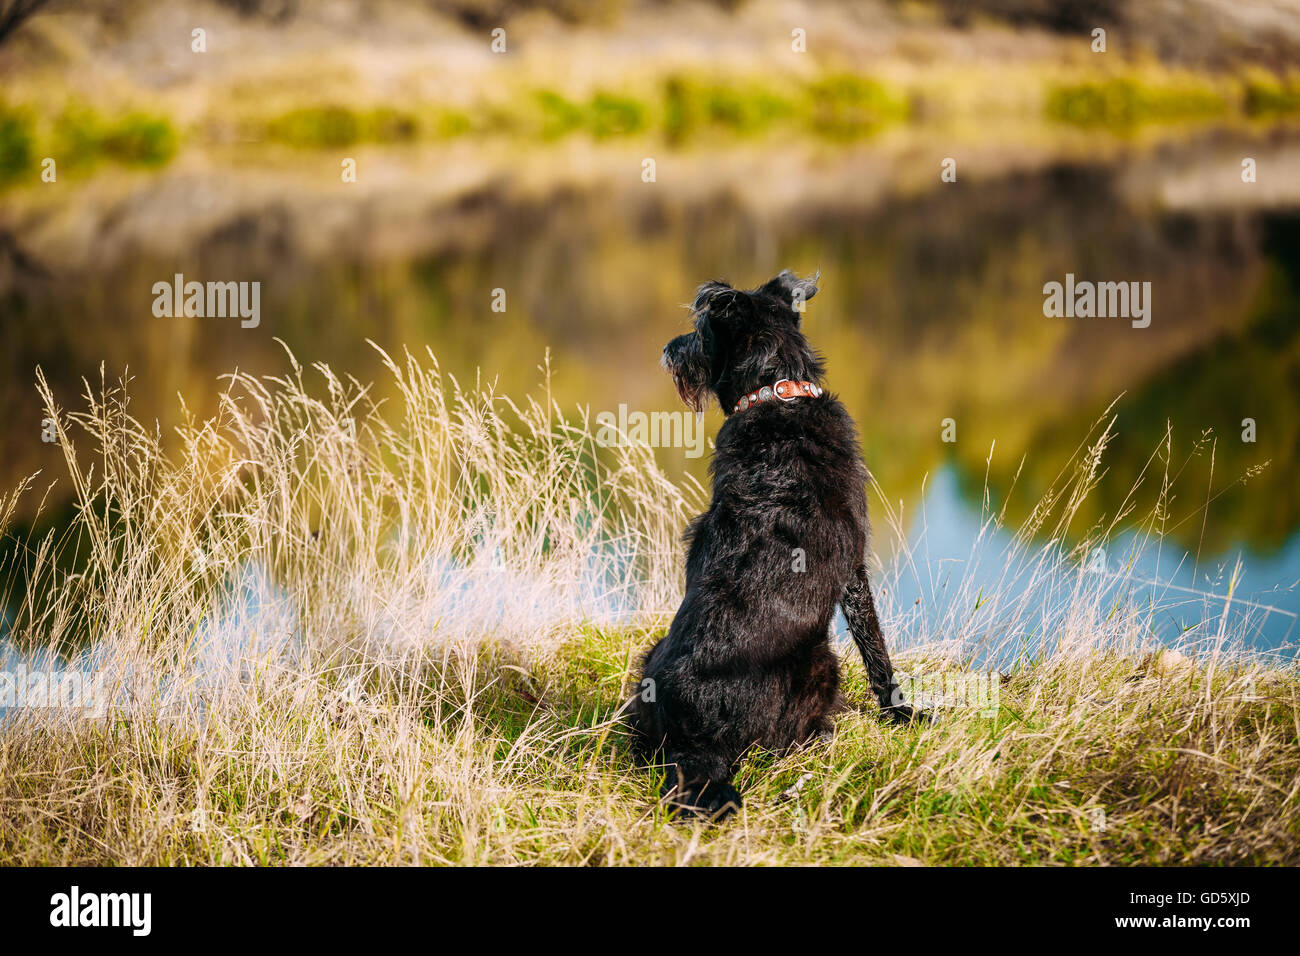 Small Size Black Dog In Grass Near River, LAKE. Summer Season. Stock Photo